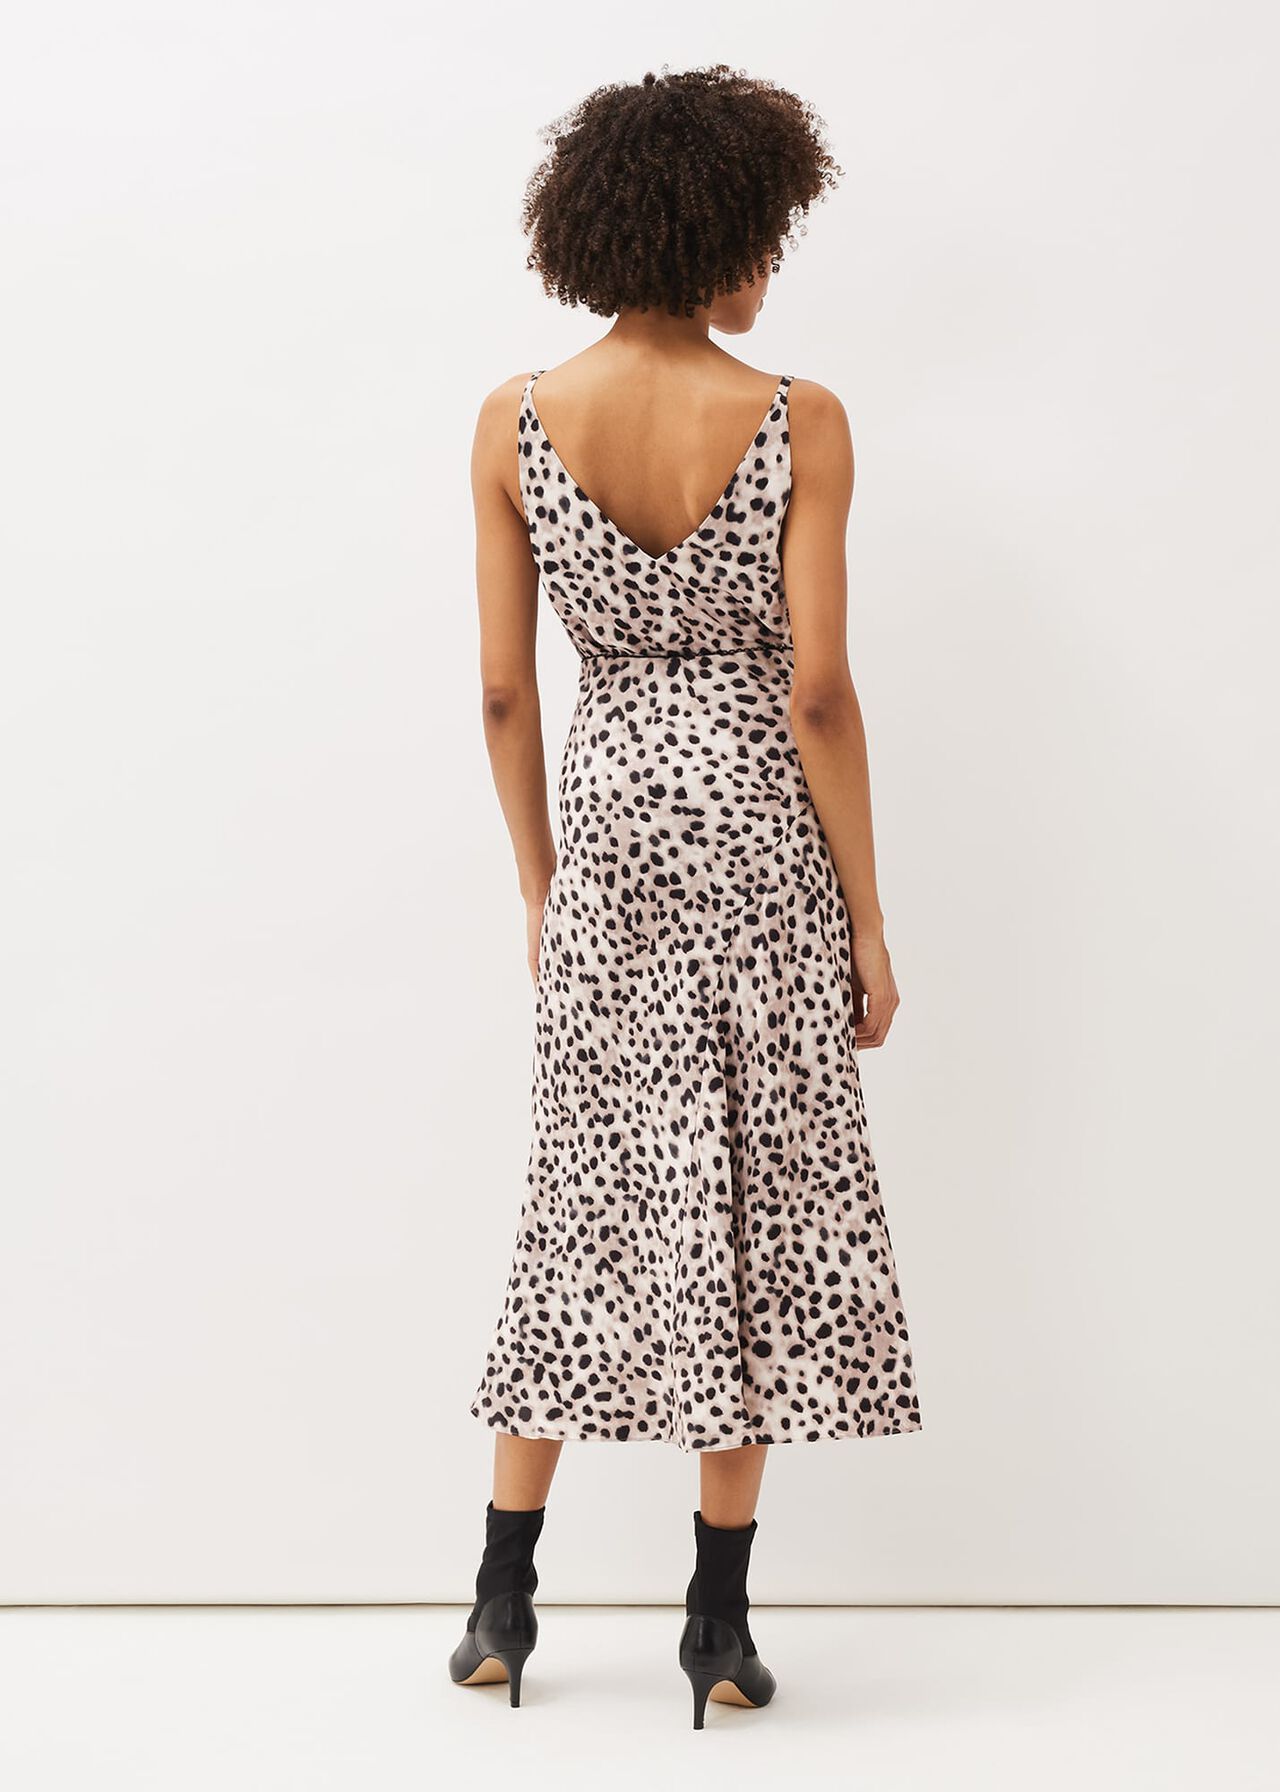 Calla Leopard Print Satin Midi Skirt